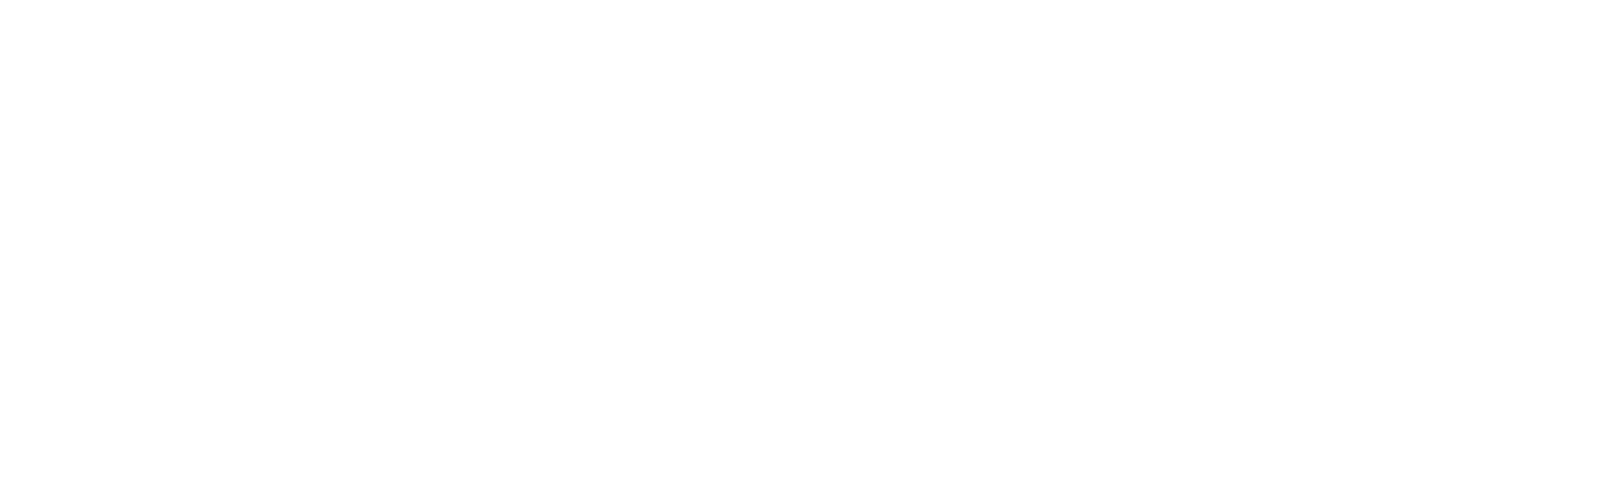 Kilwinning Crosse Lodge No. 2-237